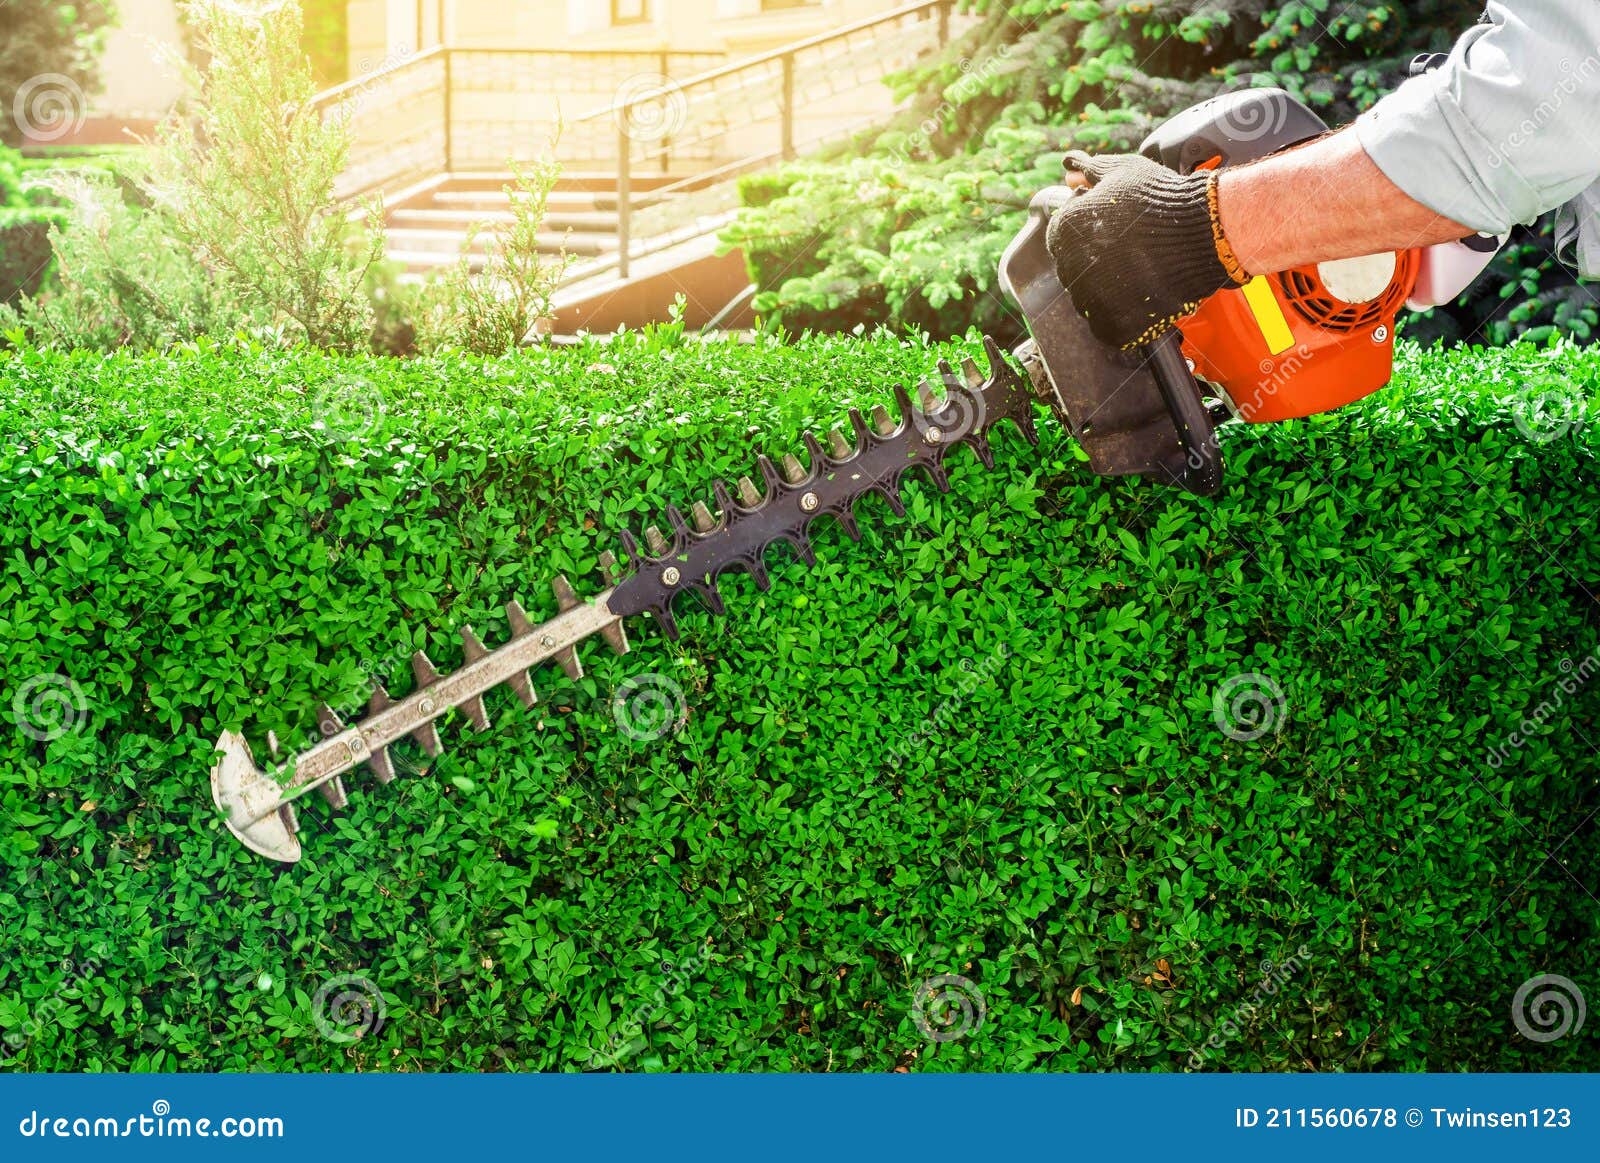 worker hands pruning bushes with the garden gasoline scissors. work in the garden, pruning the hedge